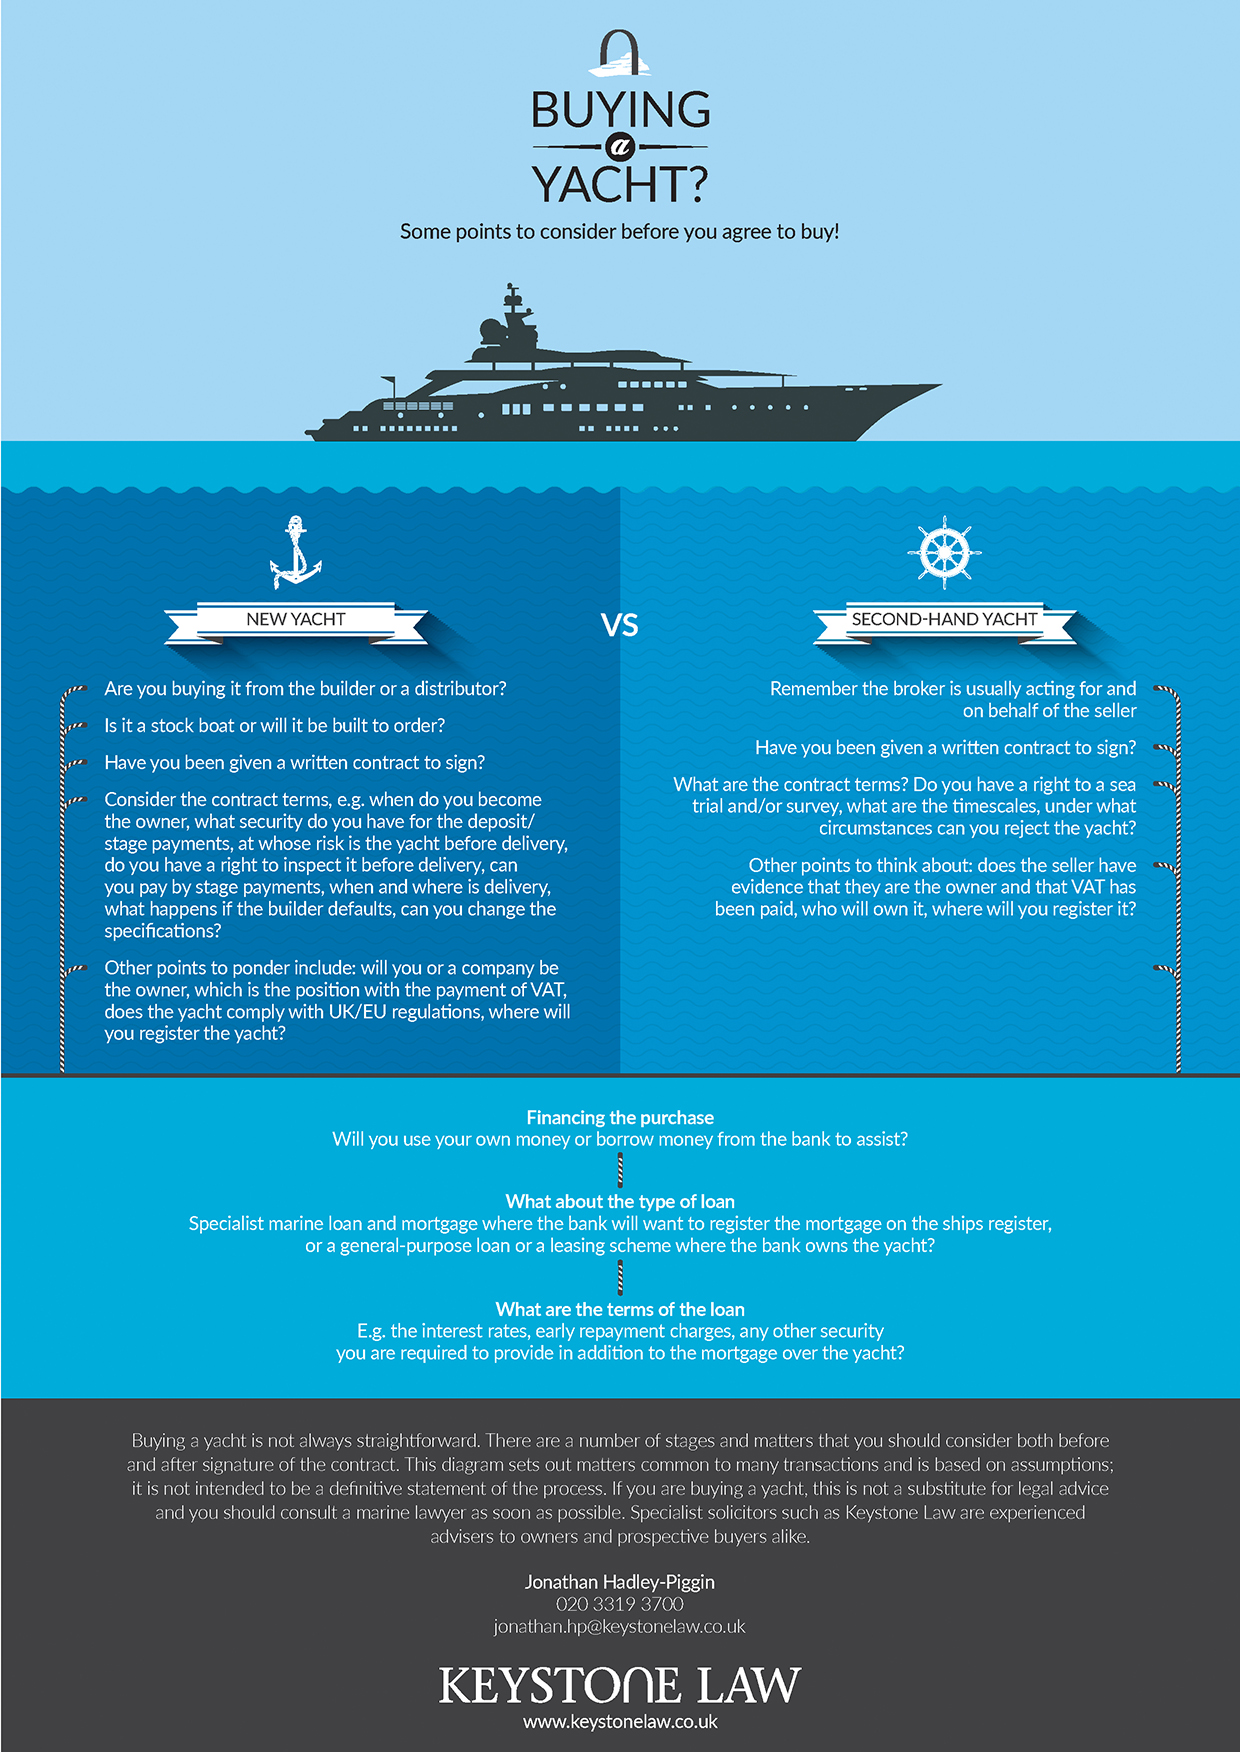 Buying_a_Yacht_Infographic_-_Jonathan_Hadley-Piggin_v02.jpg